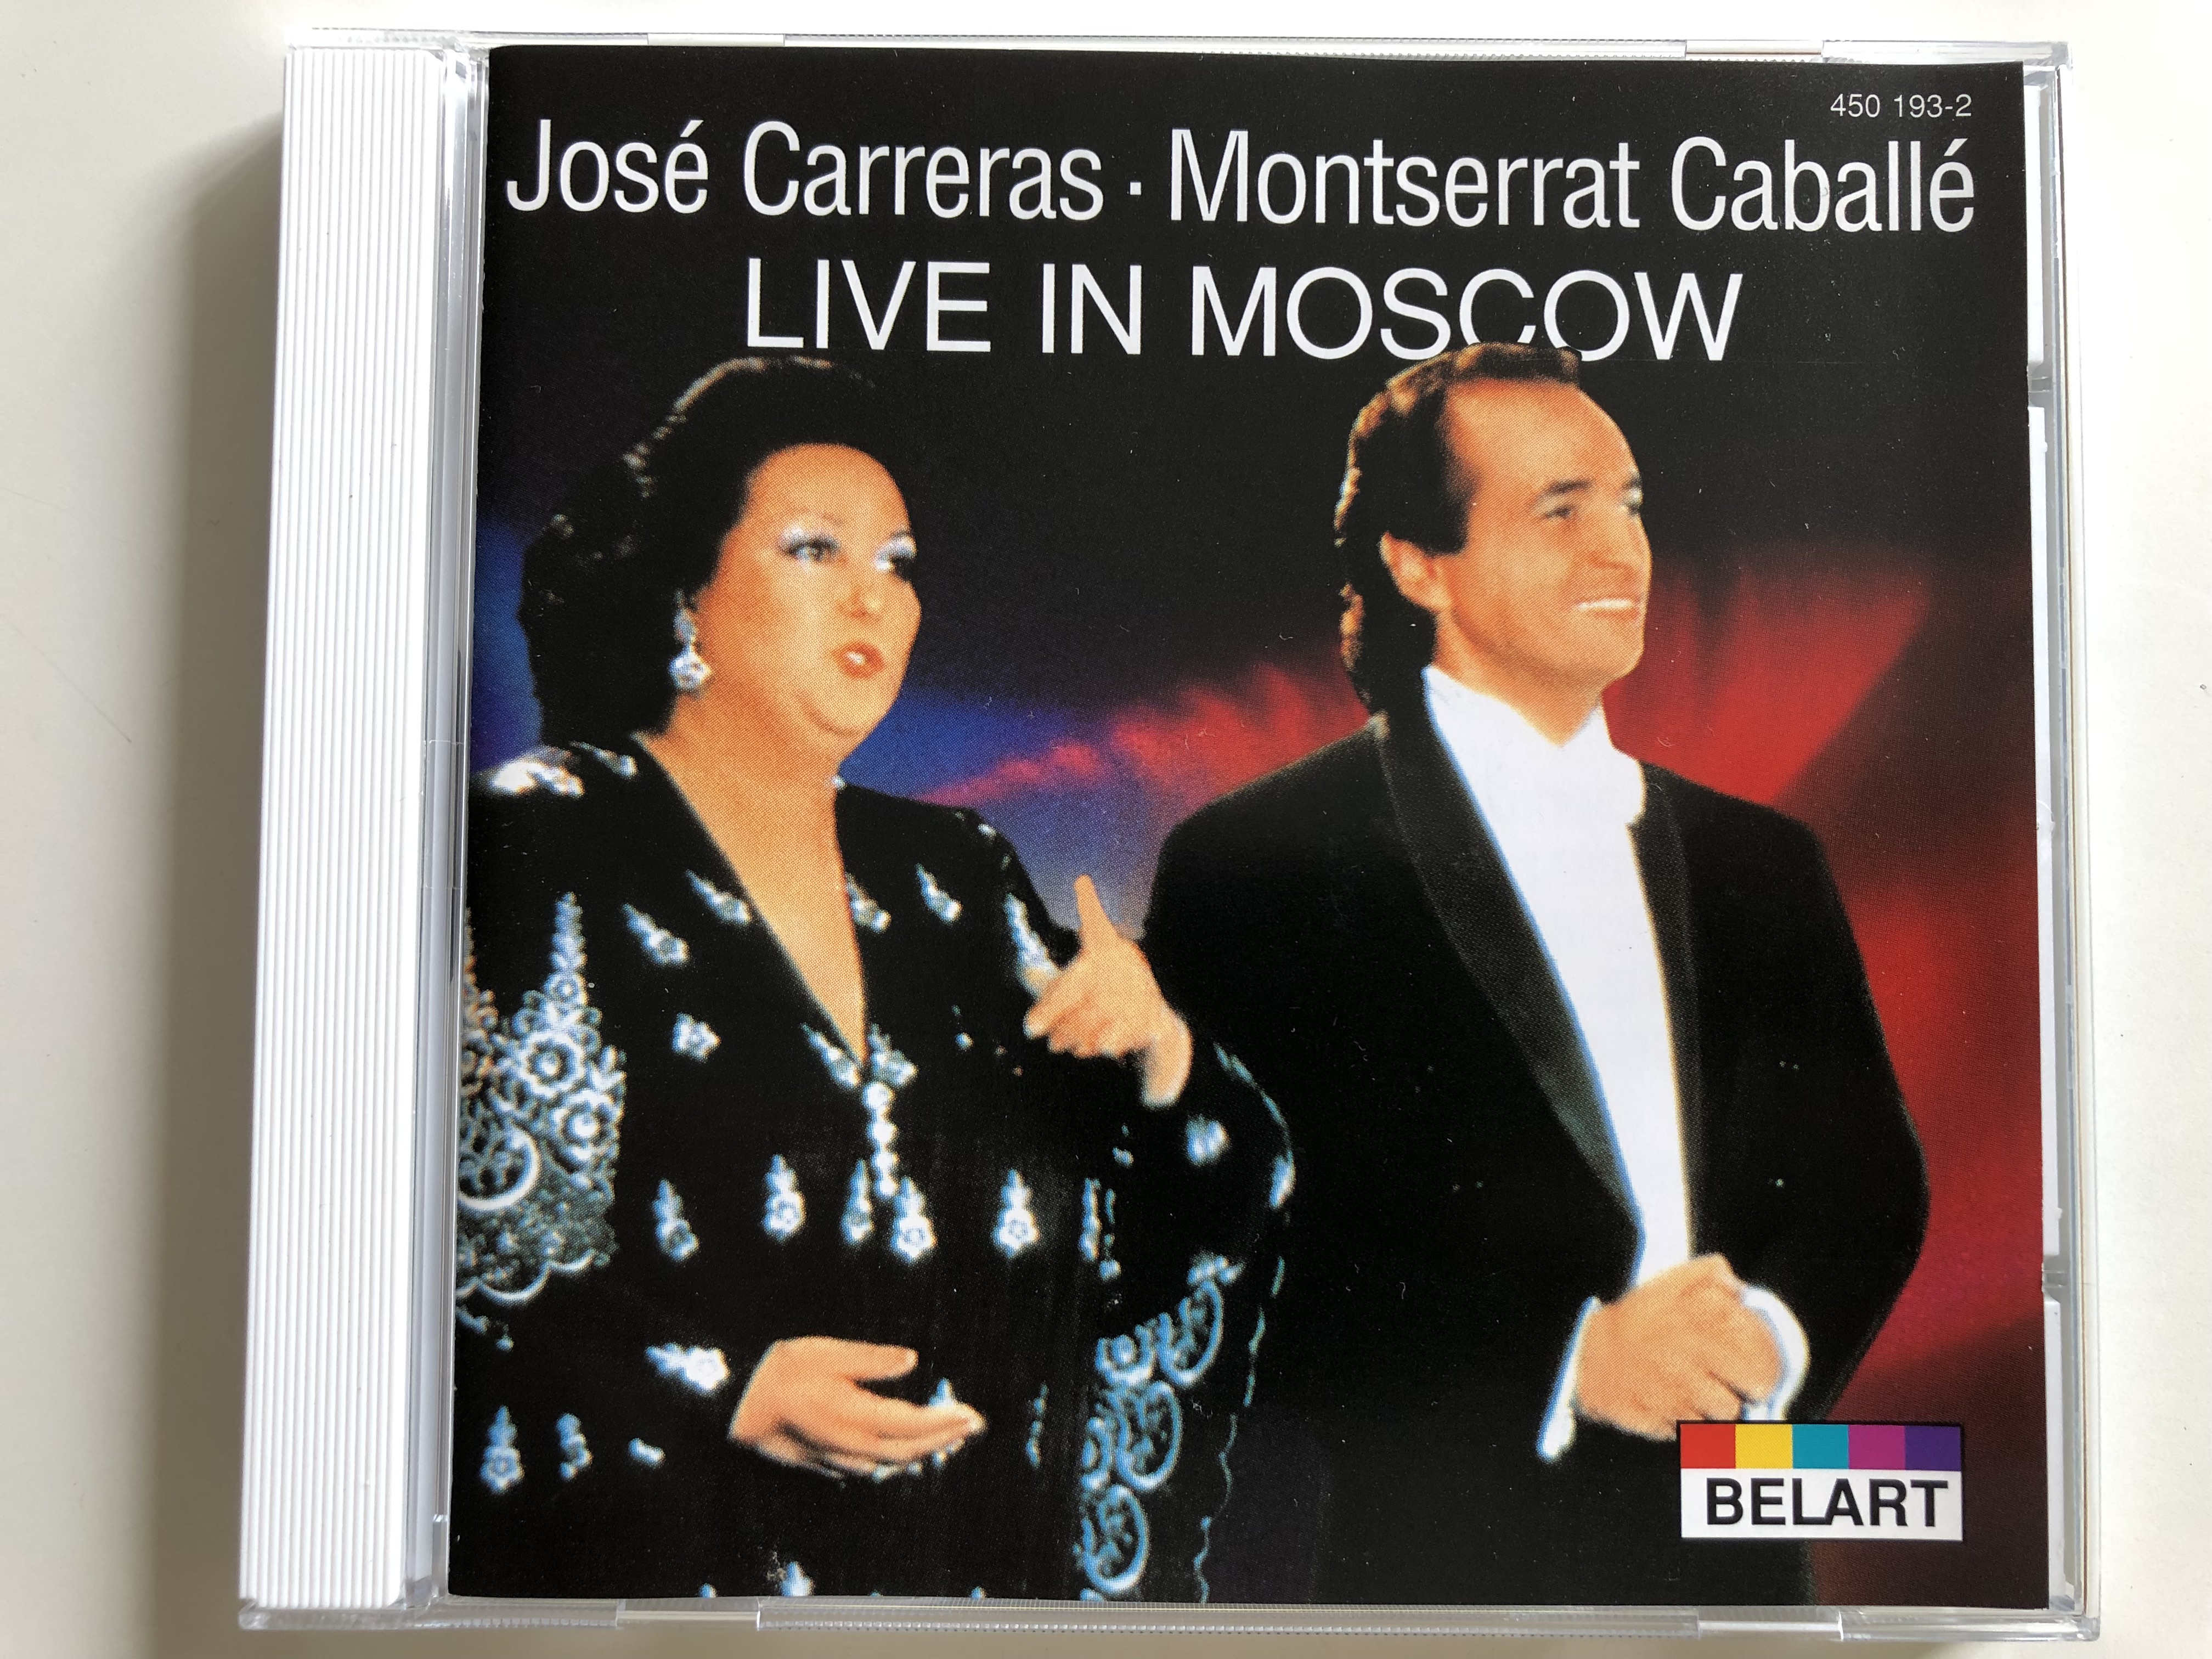 jos-carreras-montserrat-caball-live-in-moscow-belart-450-193-2-audio-cd-1-.jpg